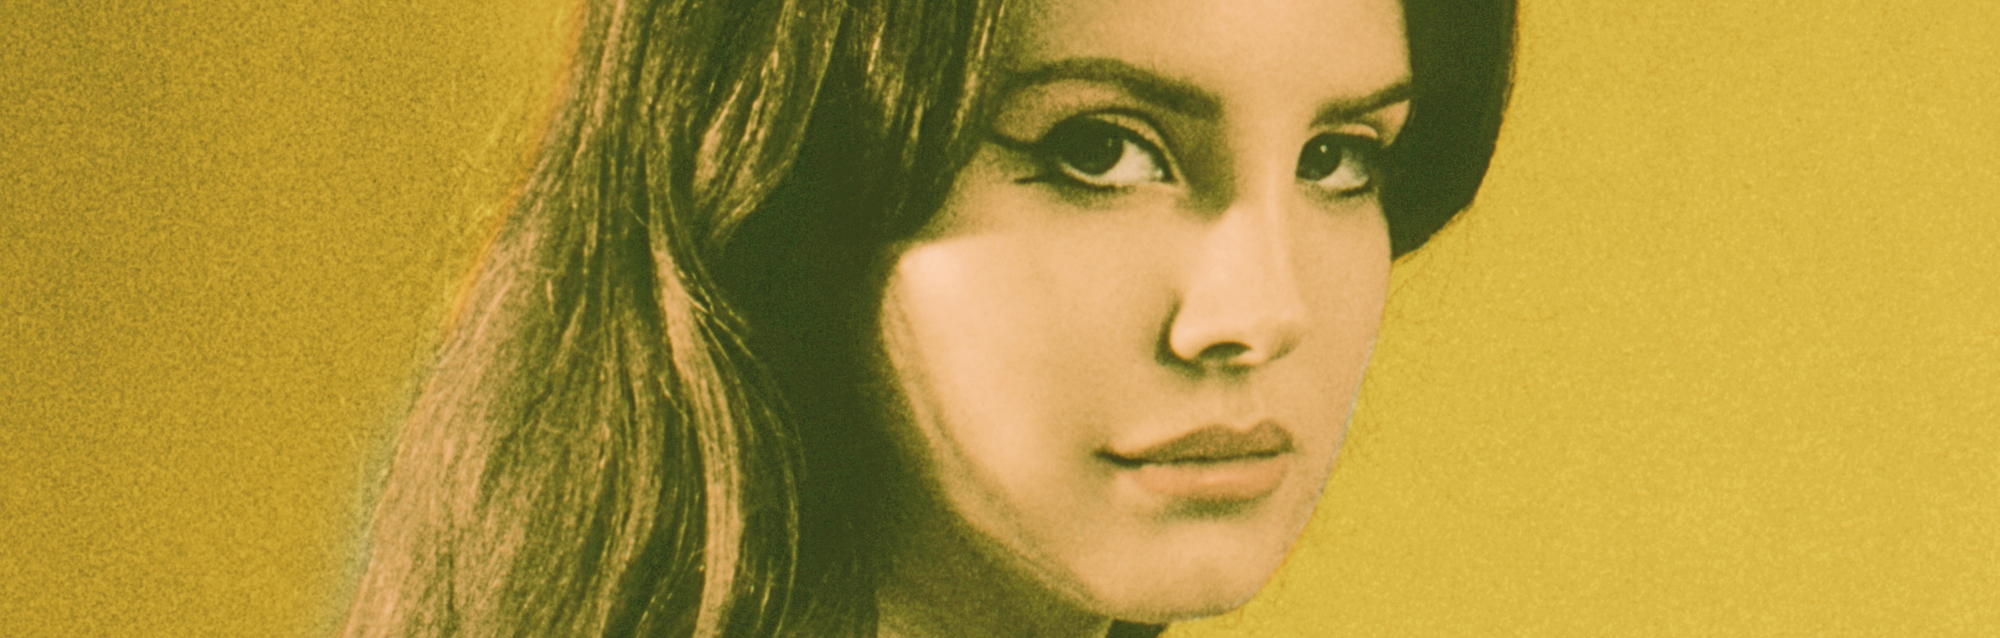 Lana Del Rey - Honeymoon - Neil Krug - Low Res